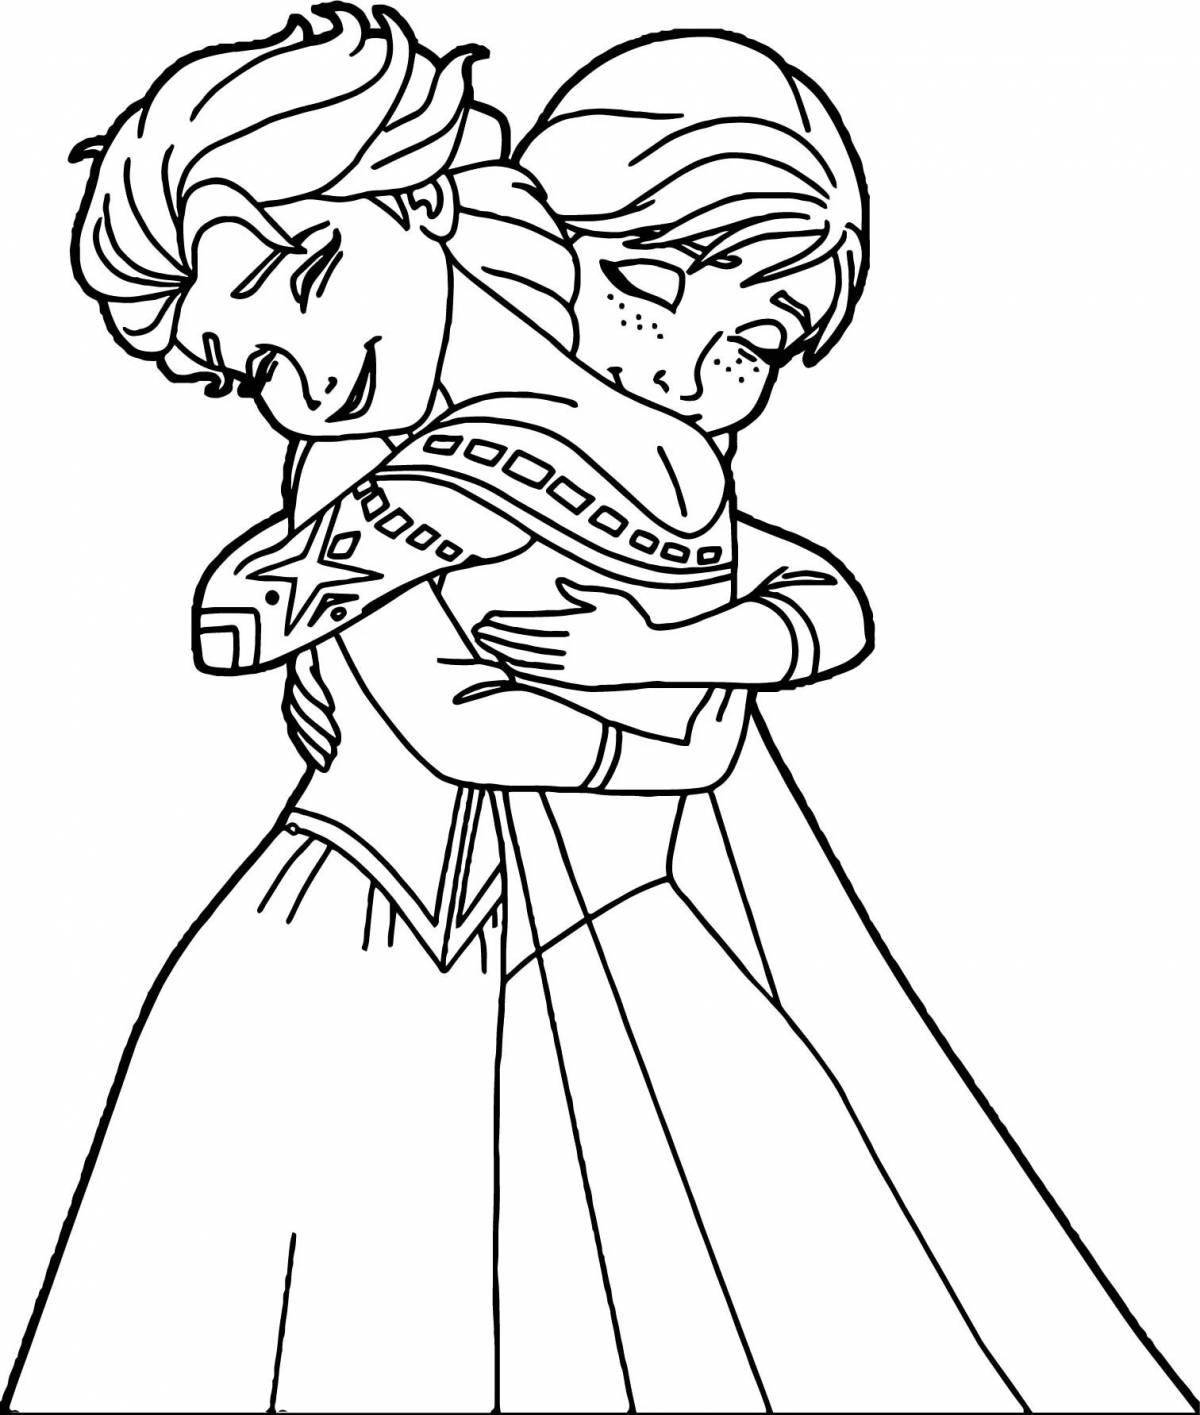 Elsa and anna wonderful coloring